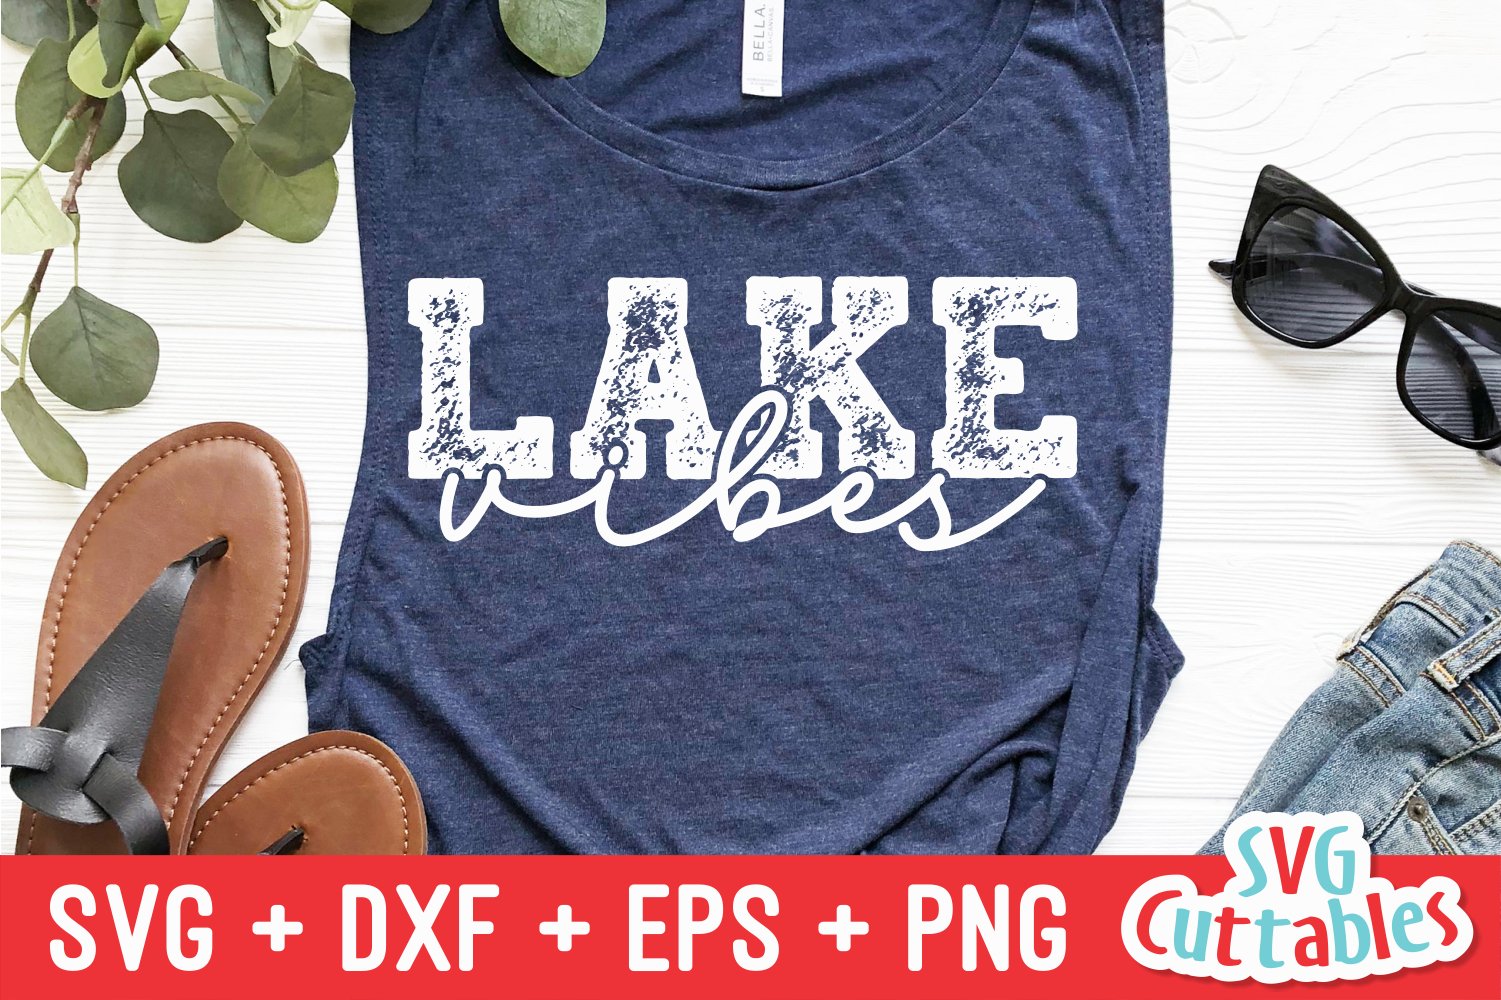 Get some lake vibes.